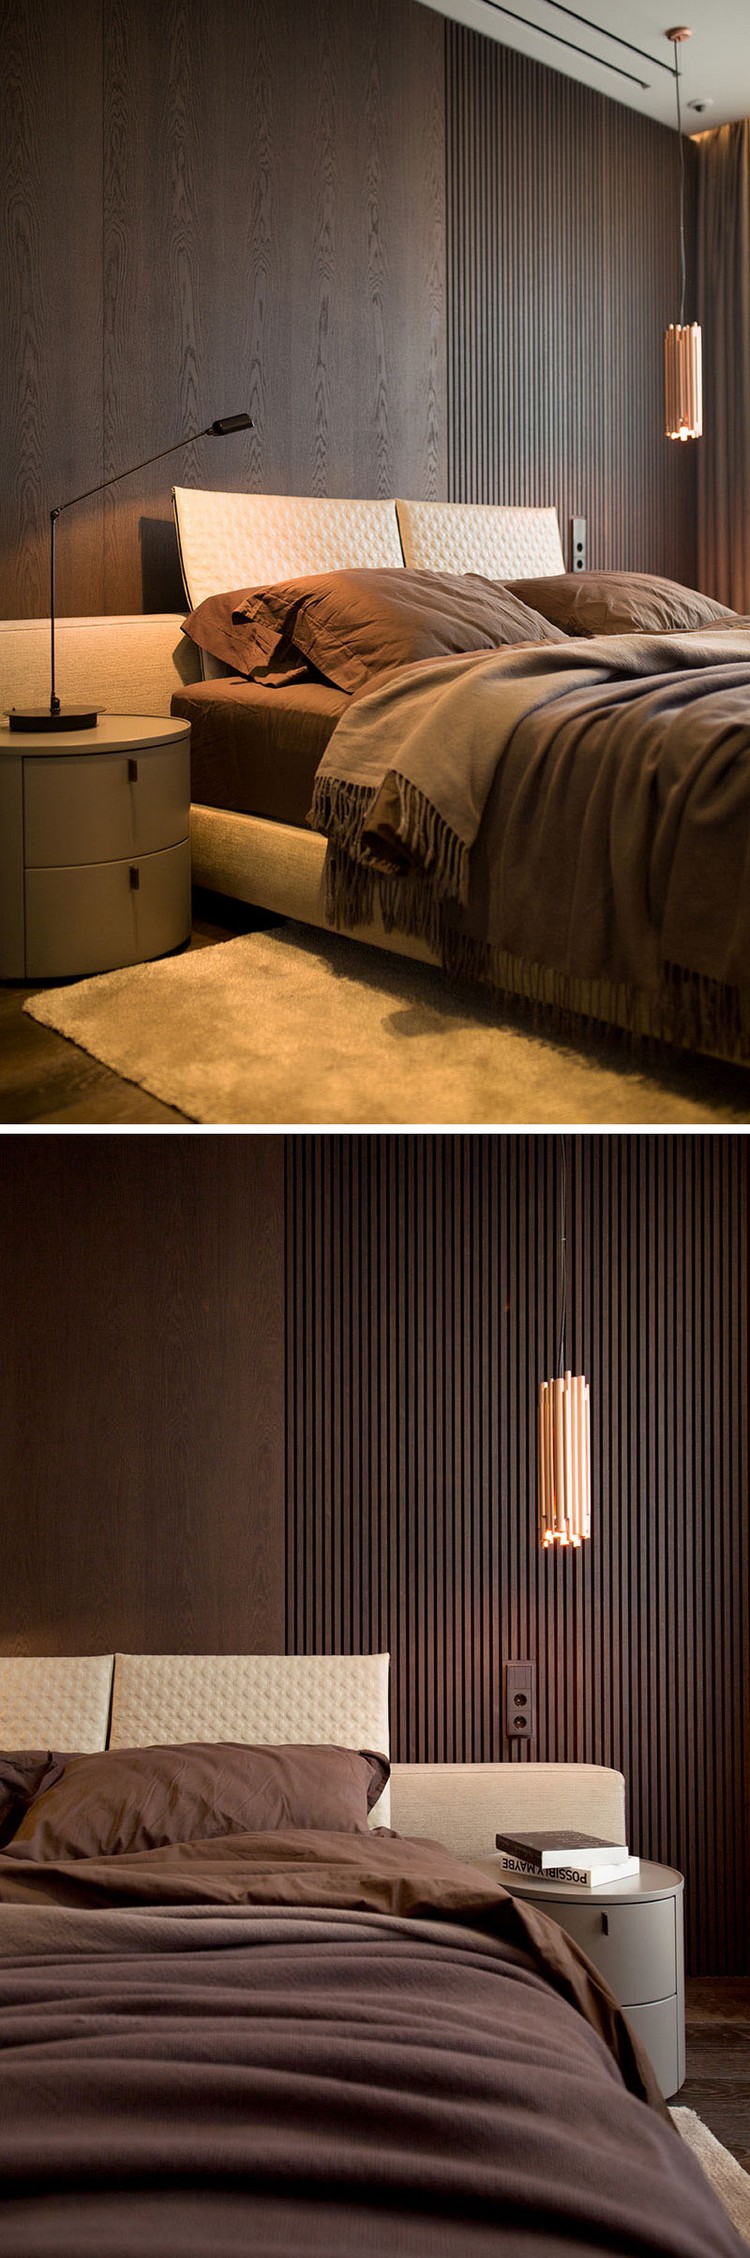 modernes schlafzimmer dunkles holz wandverkleidung pendelleuchte kupfer